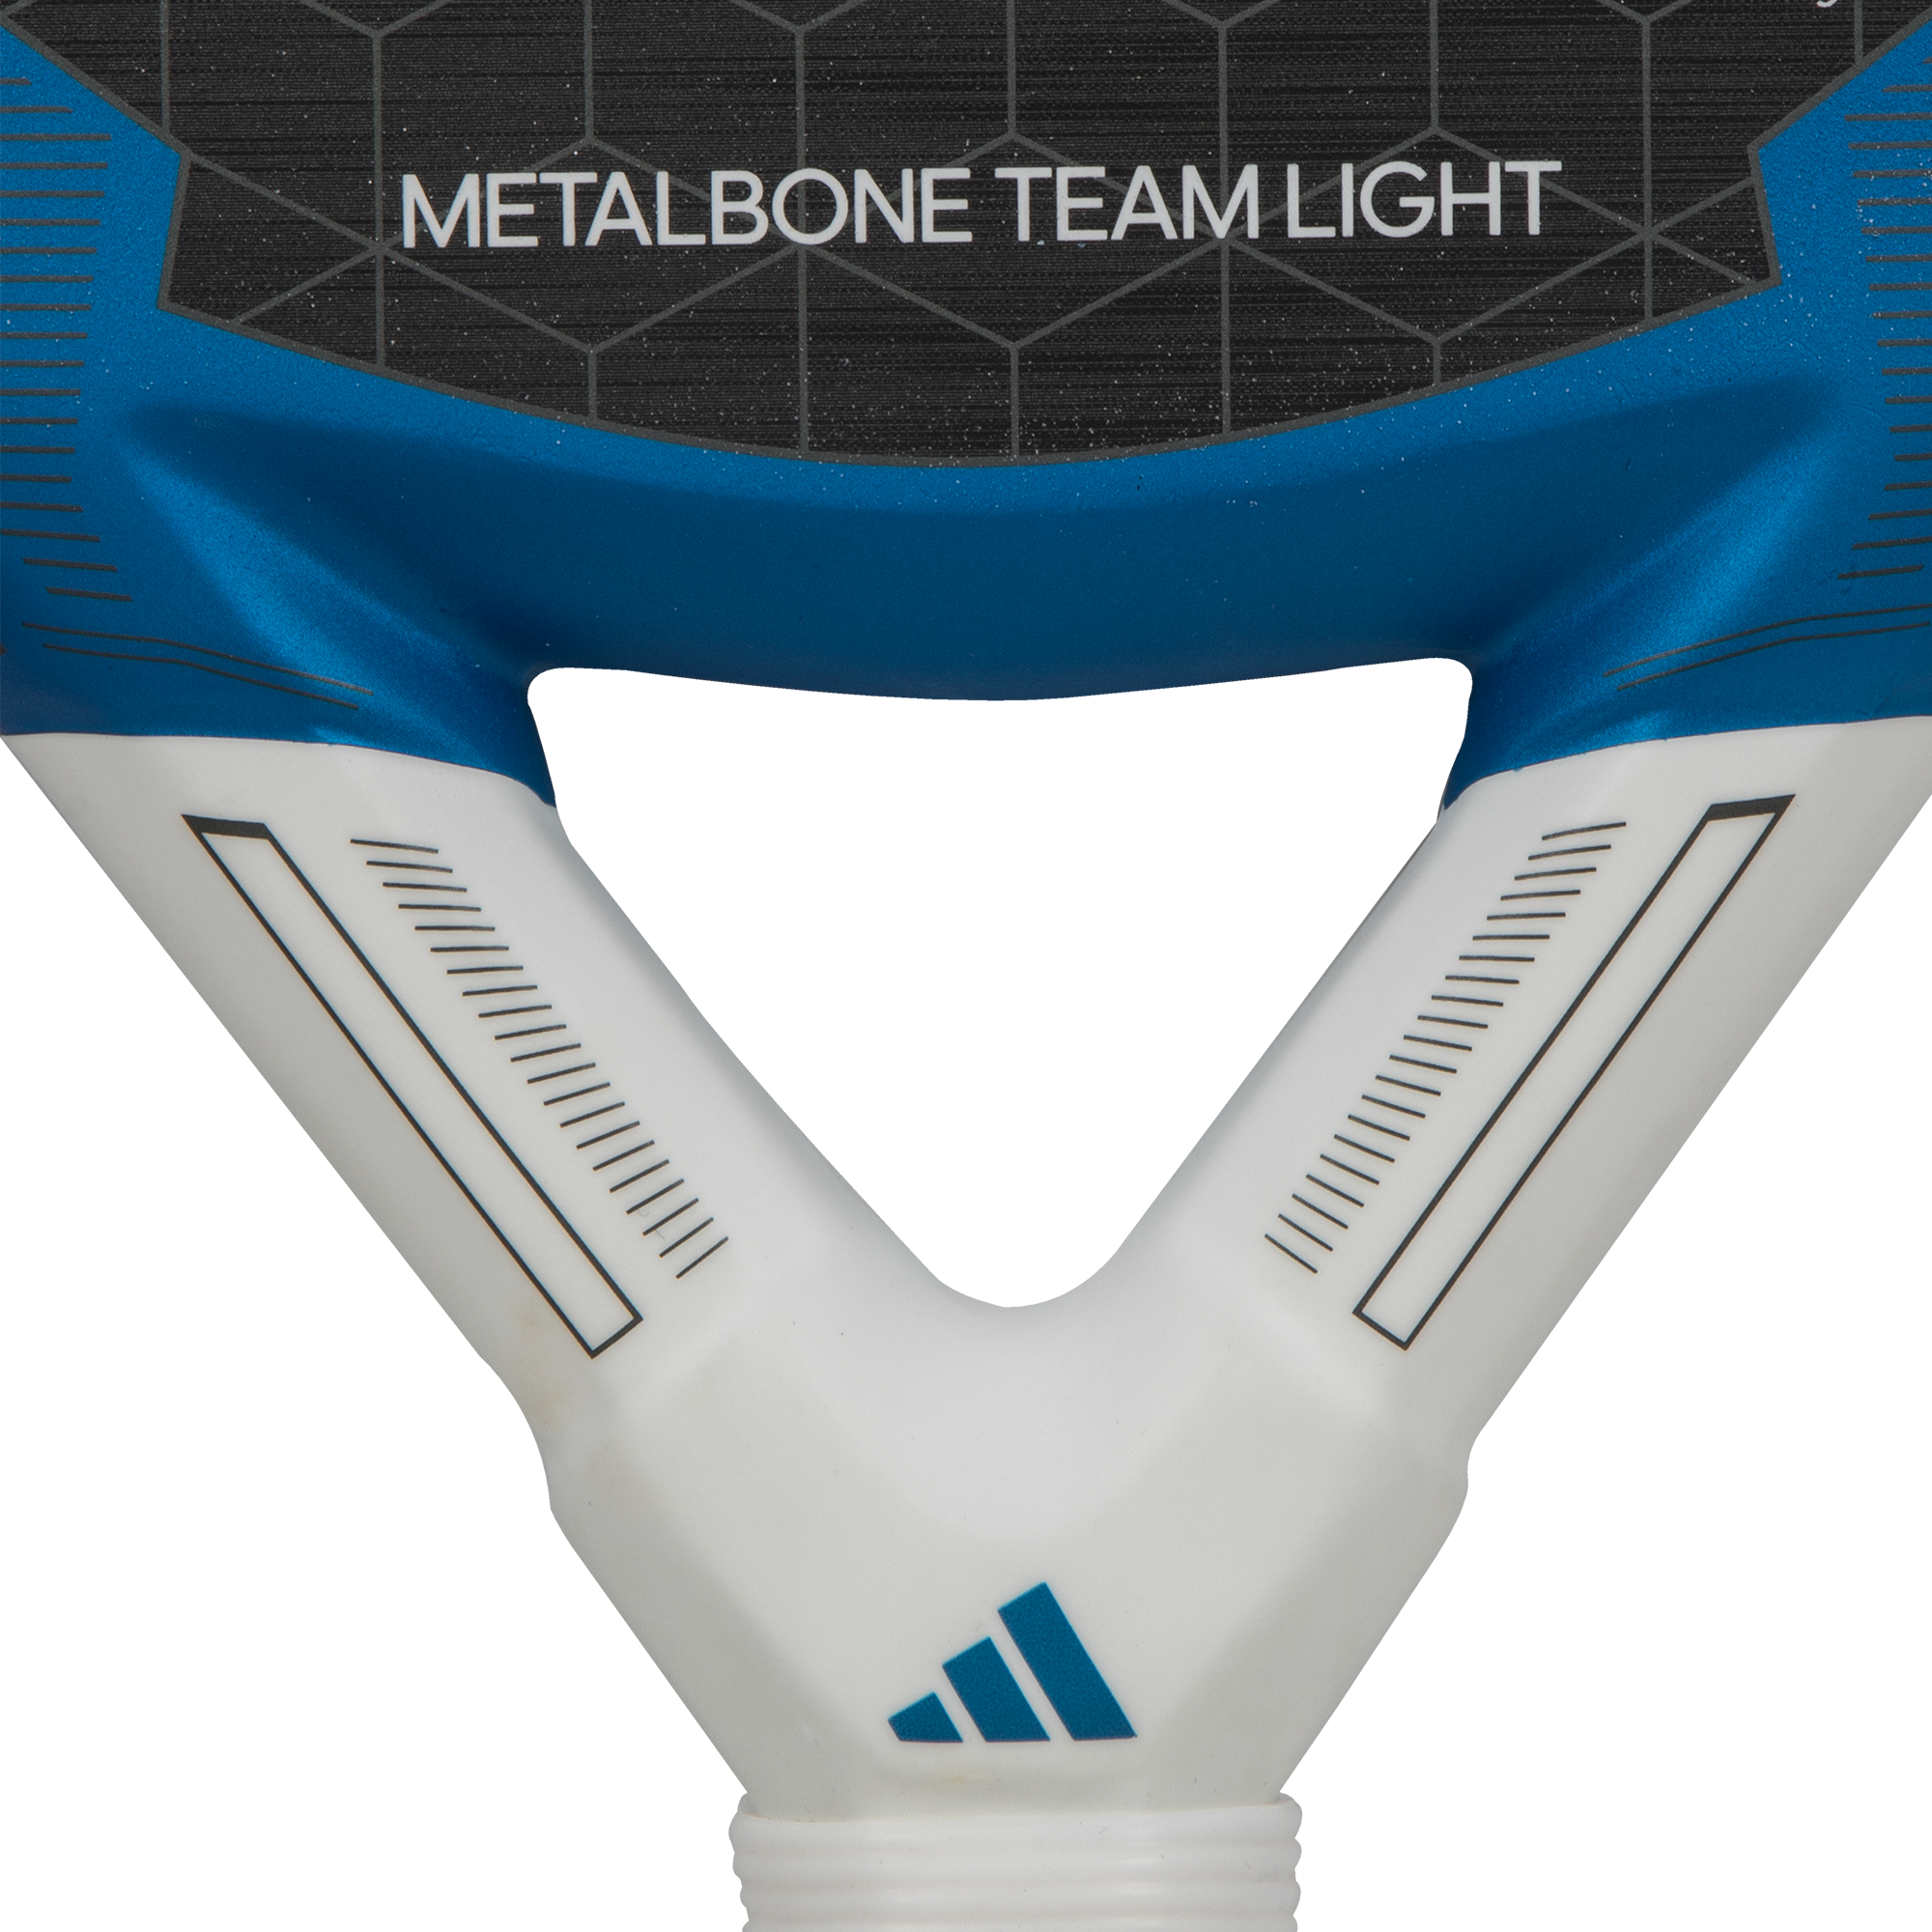 Adidas Pala Metalbone Team Light 3.3